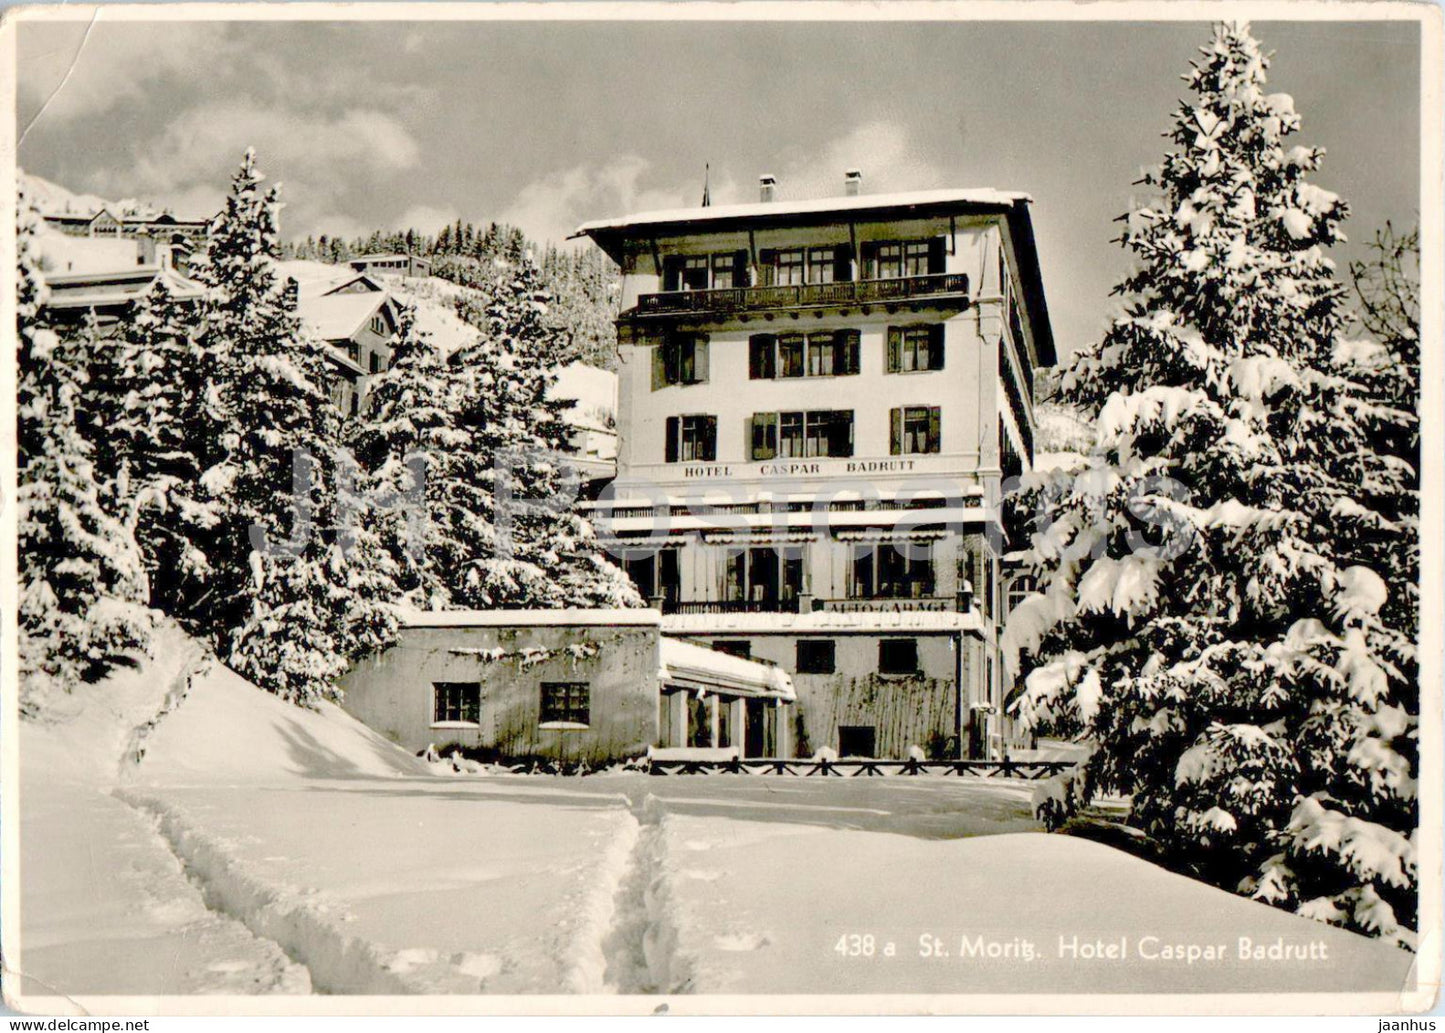 St Moritz - Hotel Caspar Badrutt - 438 - old postcard - 1937 - Switzerland - used - JH Postcards